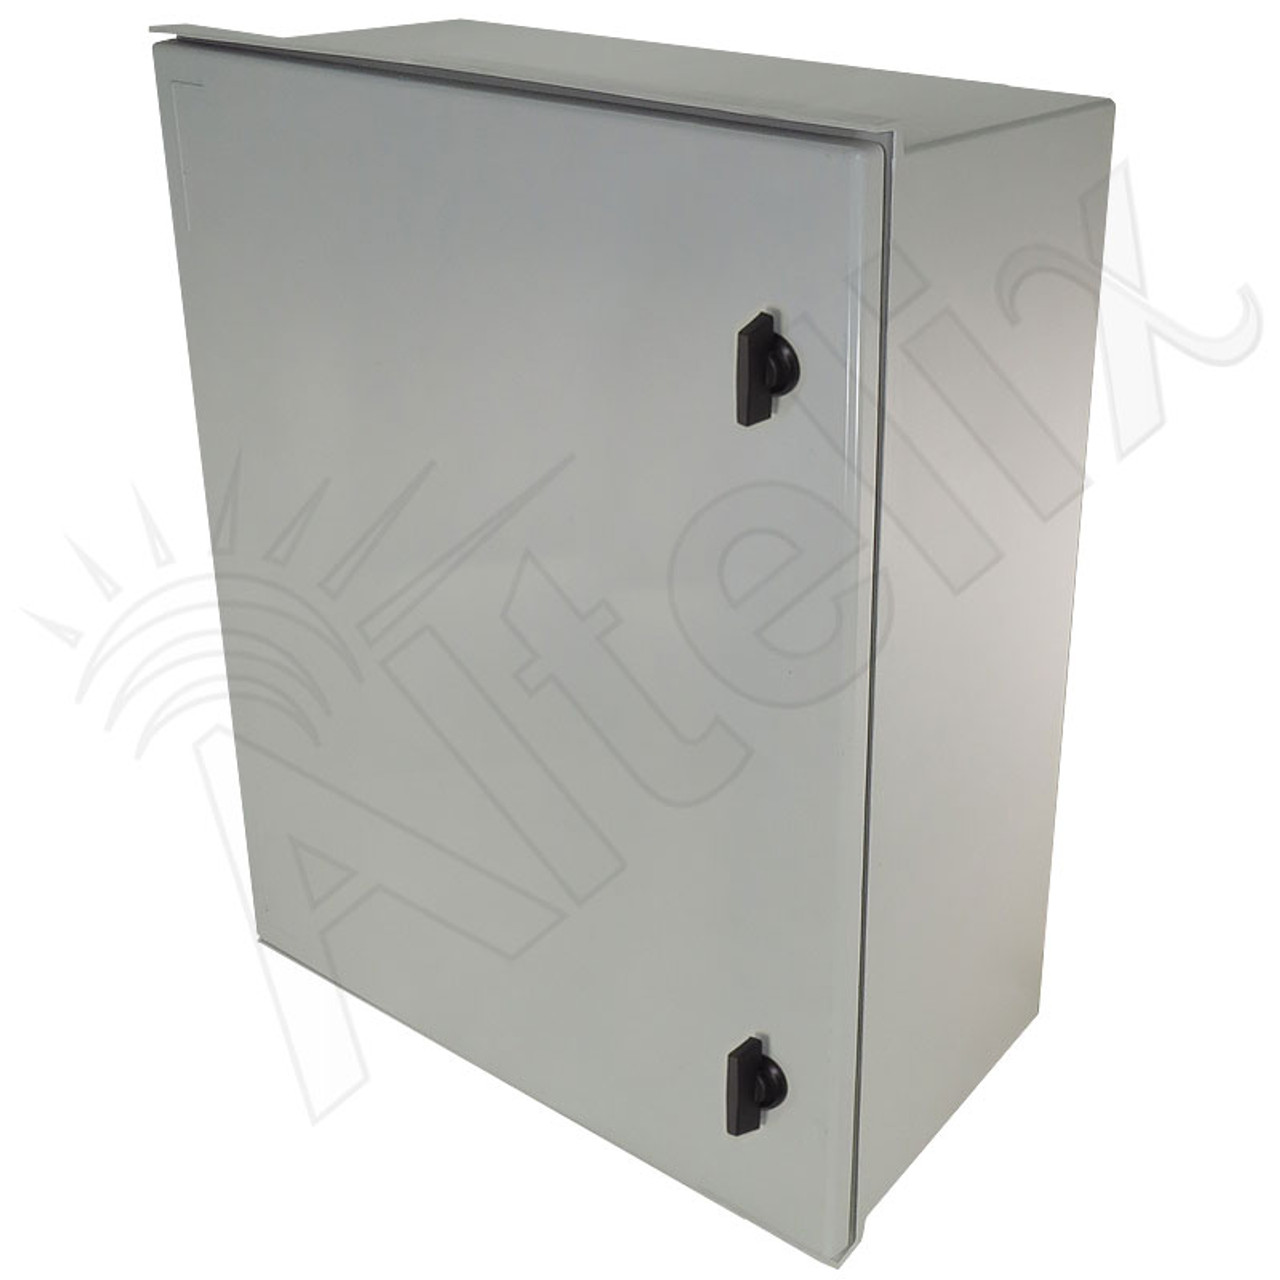 Altelix 24x20x9 NEMA 3X Fiberglass Weatherproof Enclosure with Equipment  Mounting Plate & 100-240 VAC Universal Power Outlet